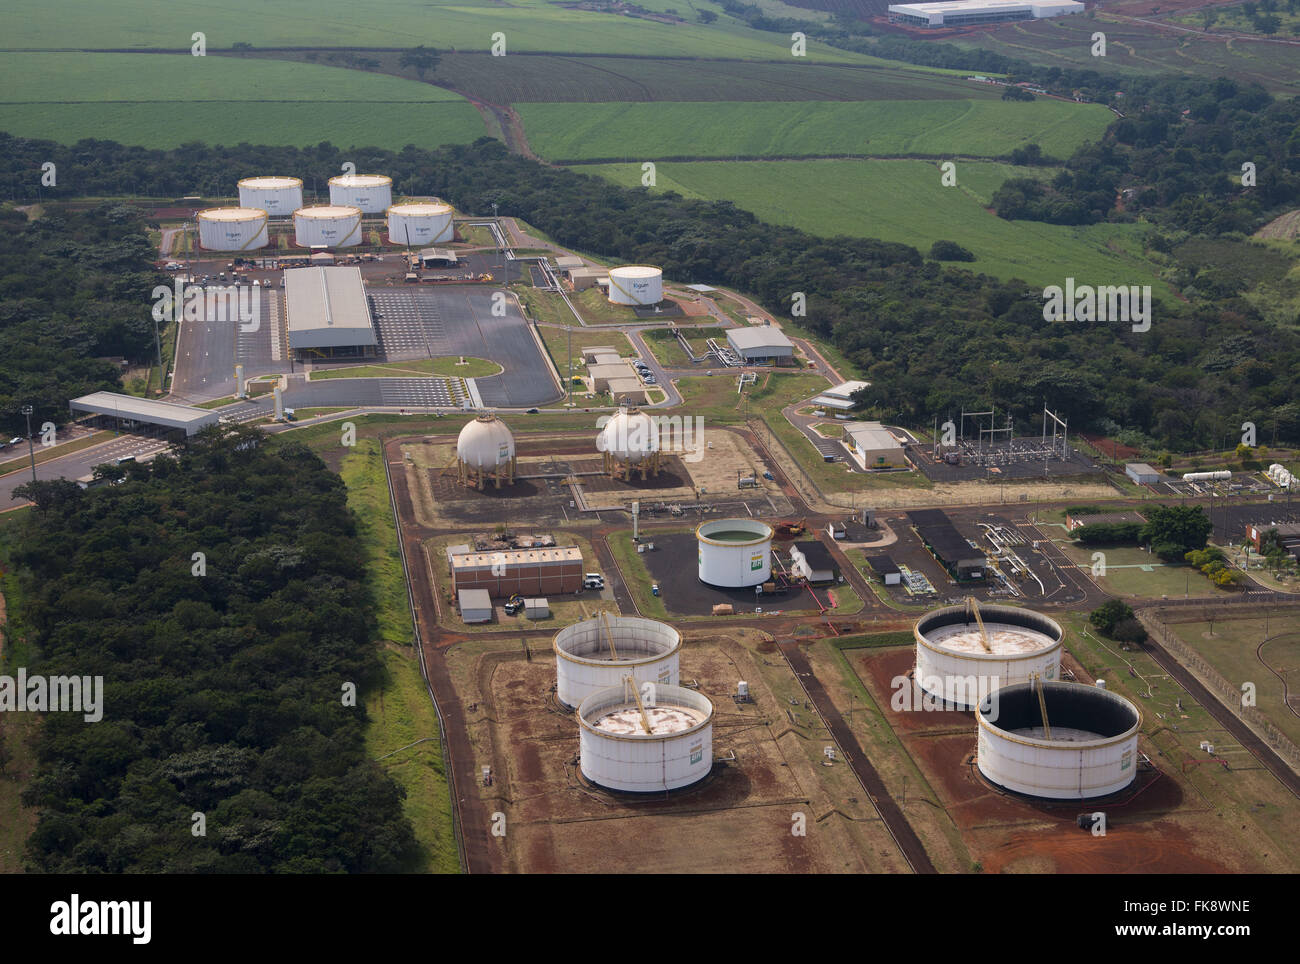 Terminal Petrobras in Ribeirao Preto - Incidental Ethanol Pipeline Stock Photo